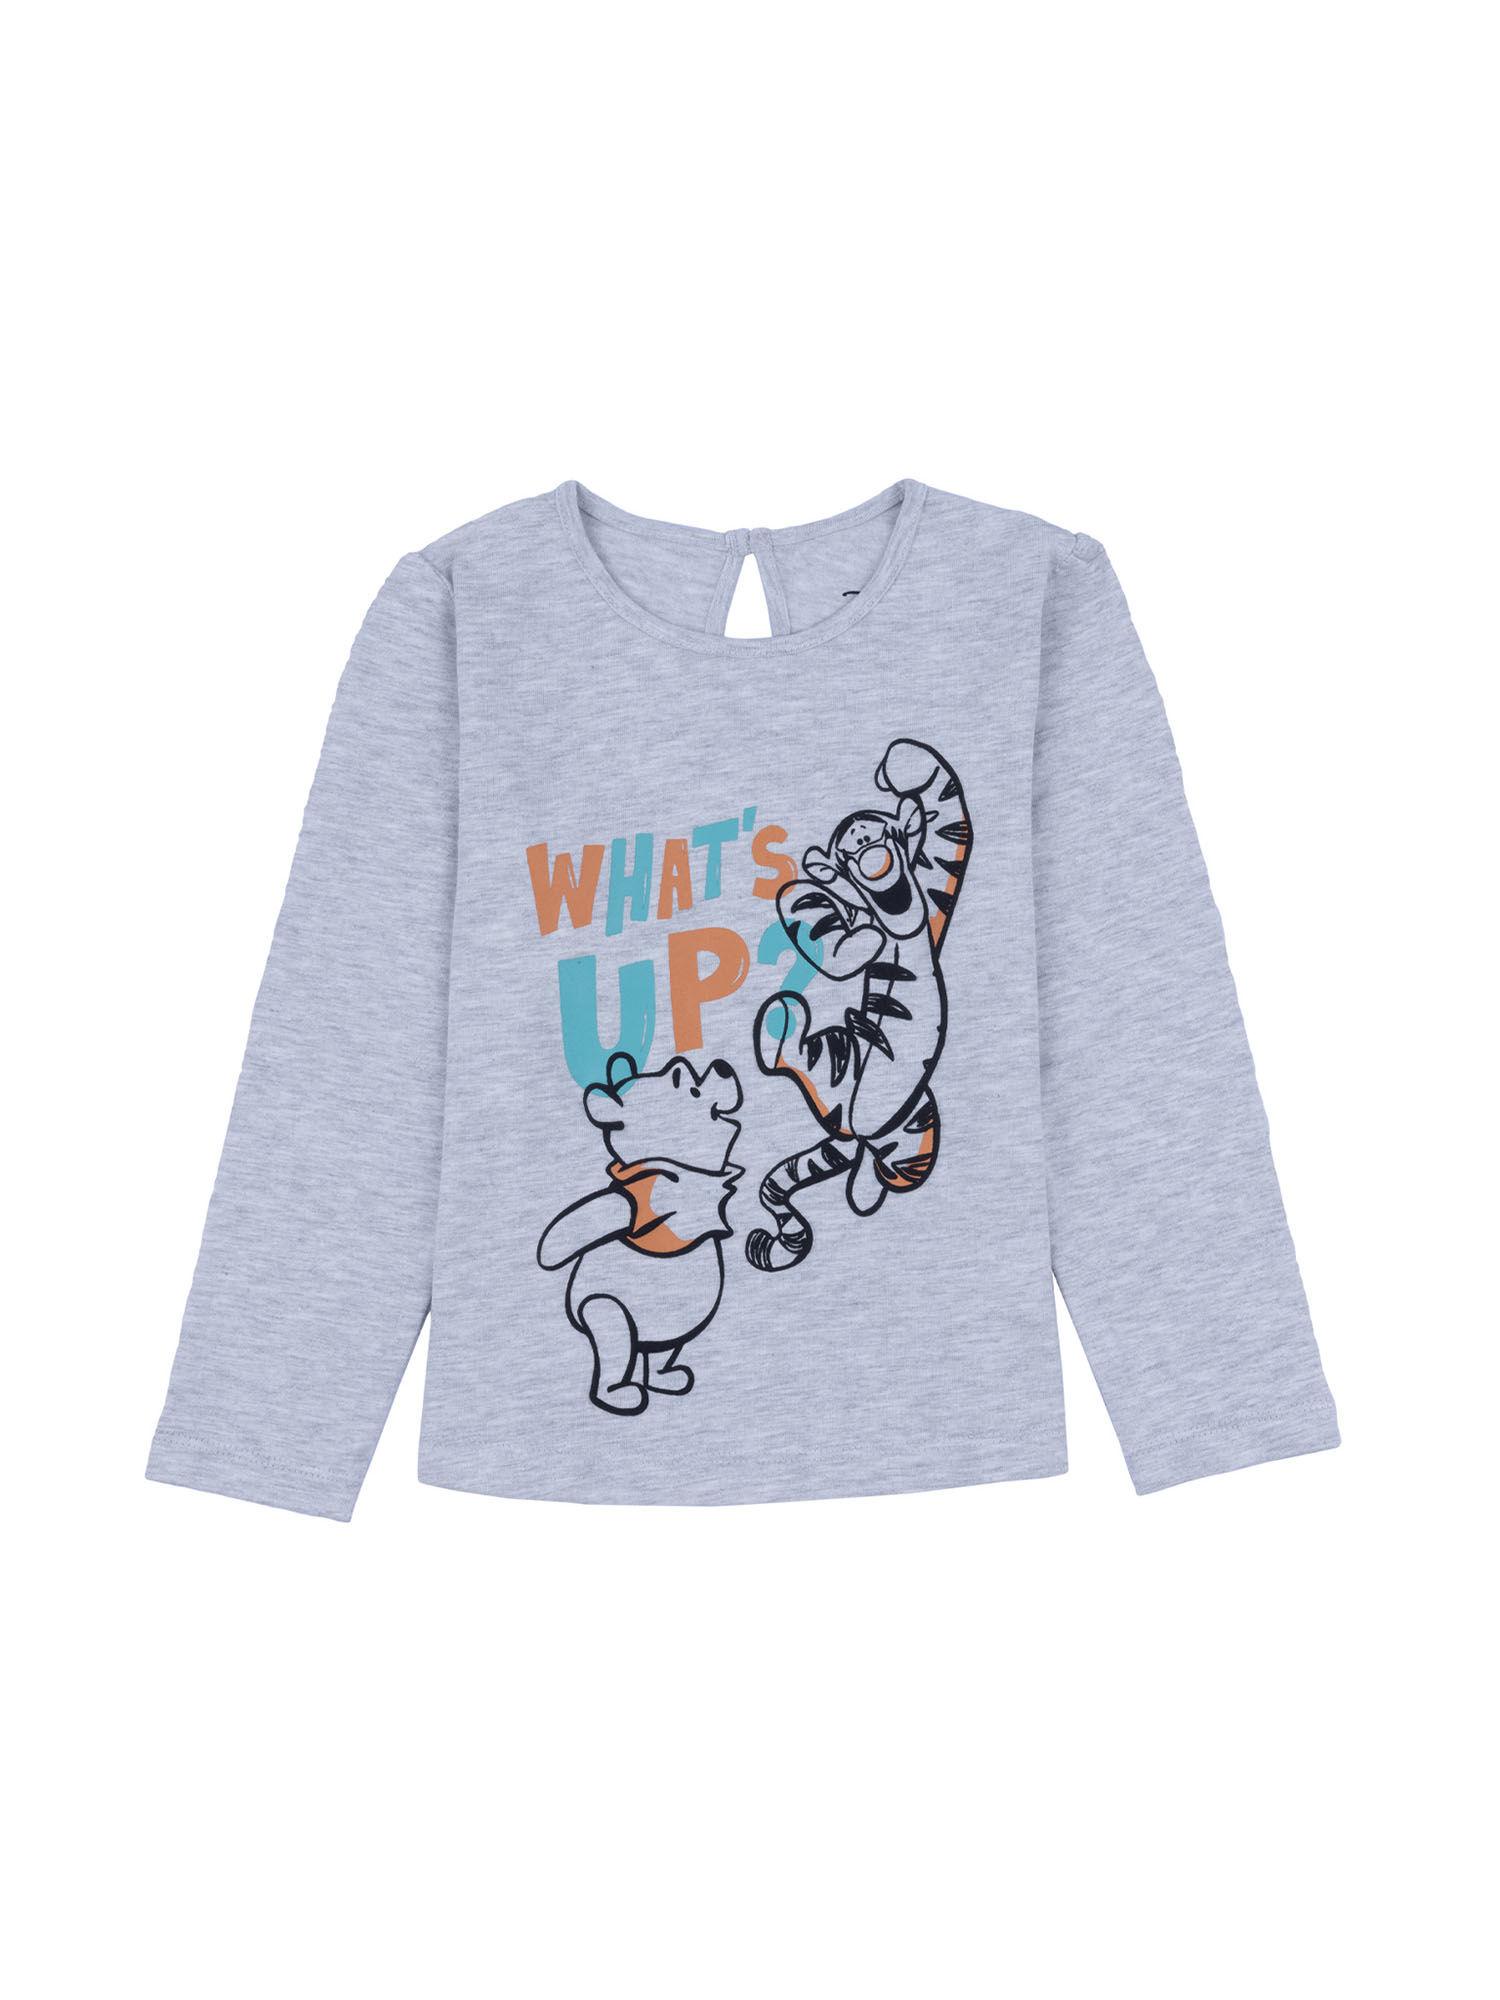 girls winnie the pooh "whats up" puff printed cotton grey tshirt